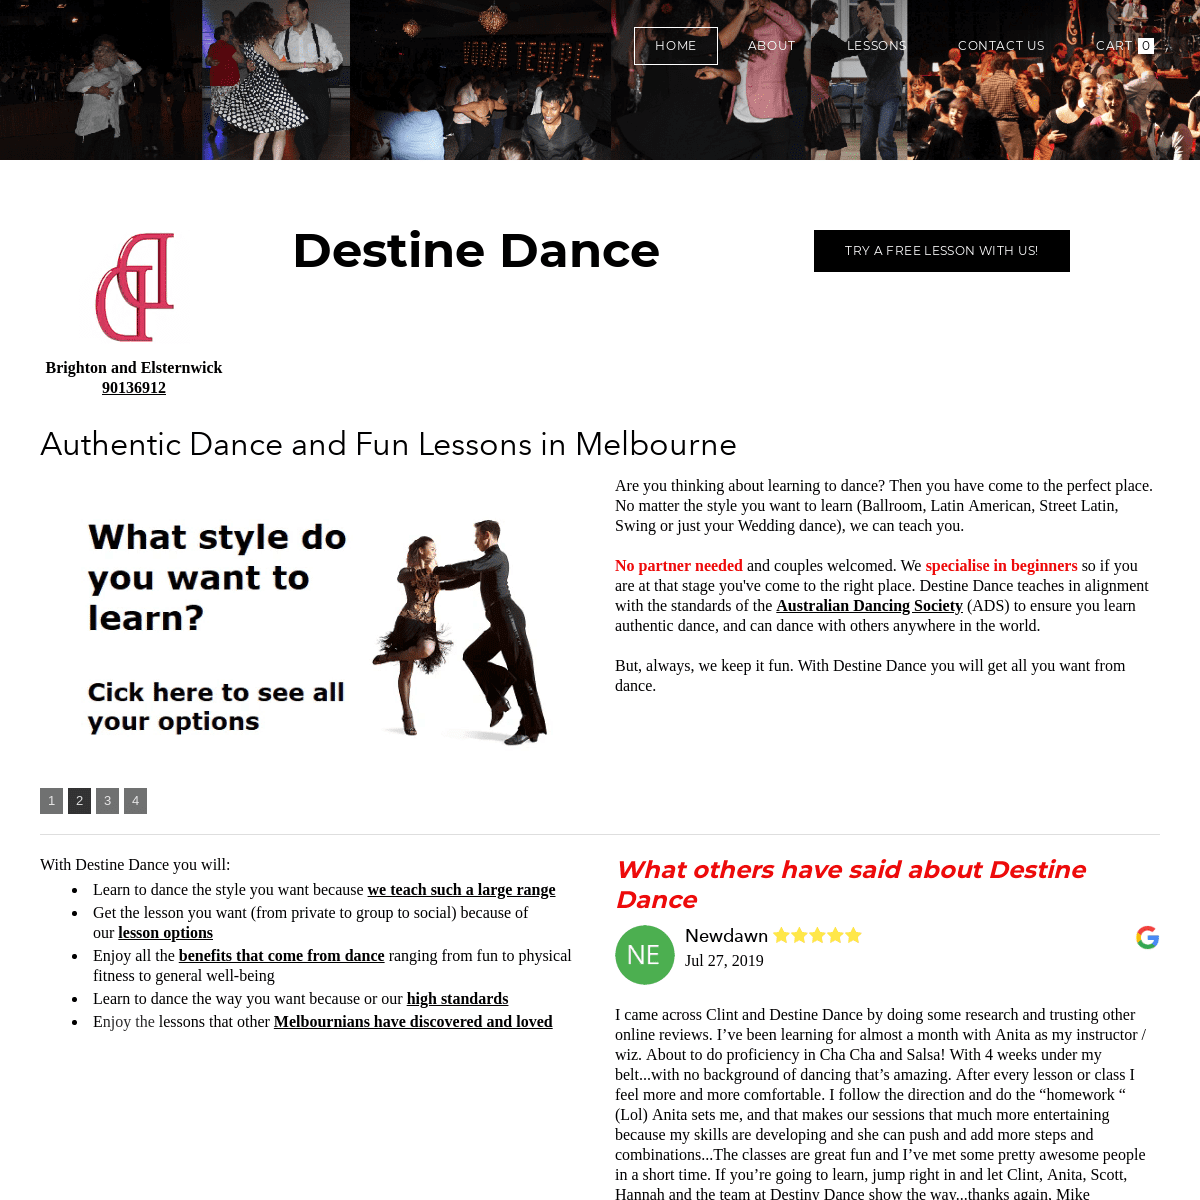 A complete backup of destinedance.com.au